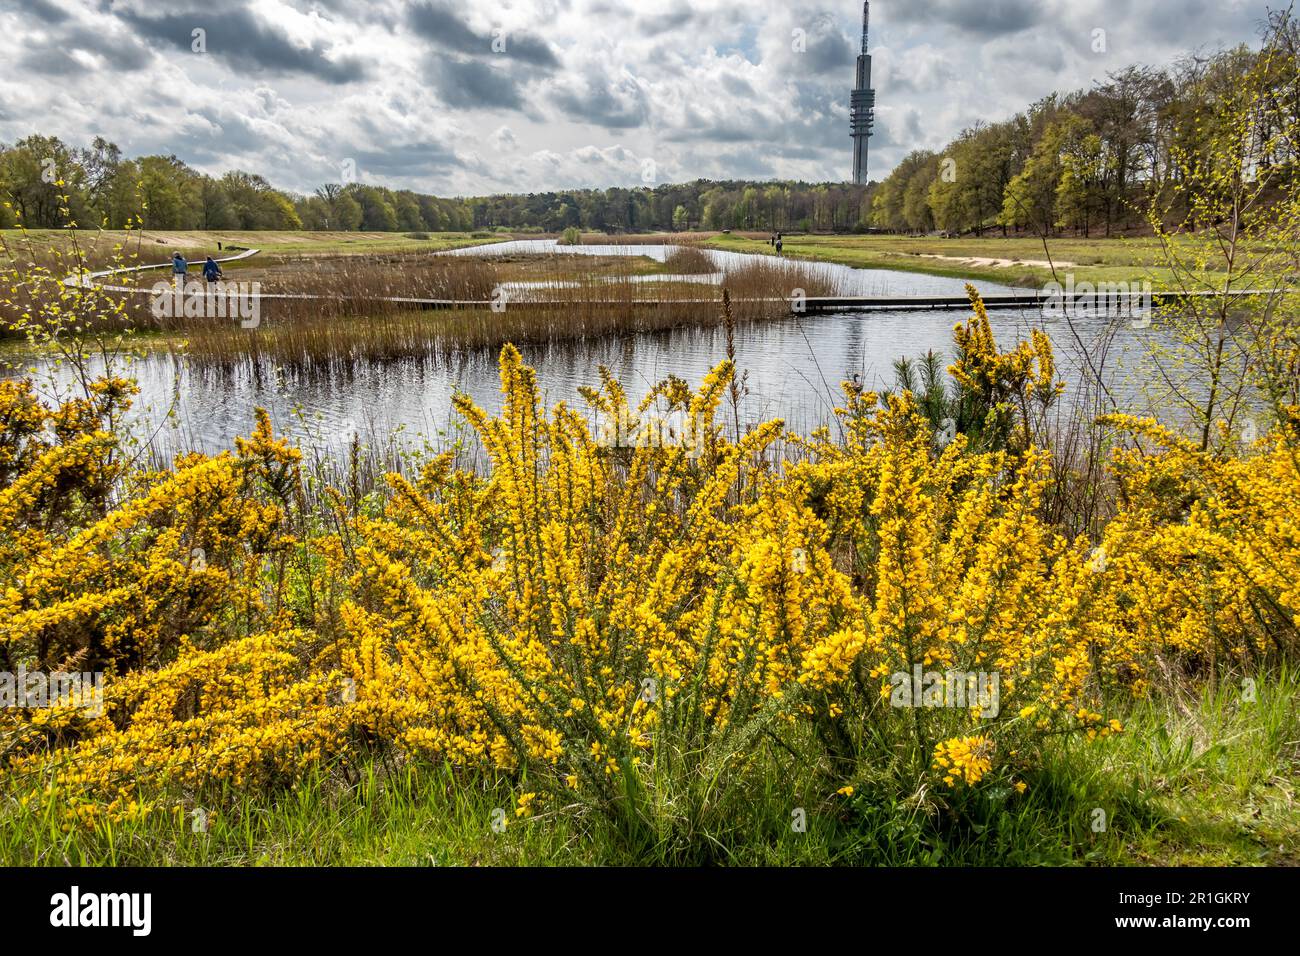 Gorse, Ulex europaeus, with yellow flowers and boardwalk in wetland nature reserve Zanderij Crailo, Hilversum, Netherlands Stock Photo